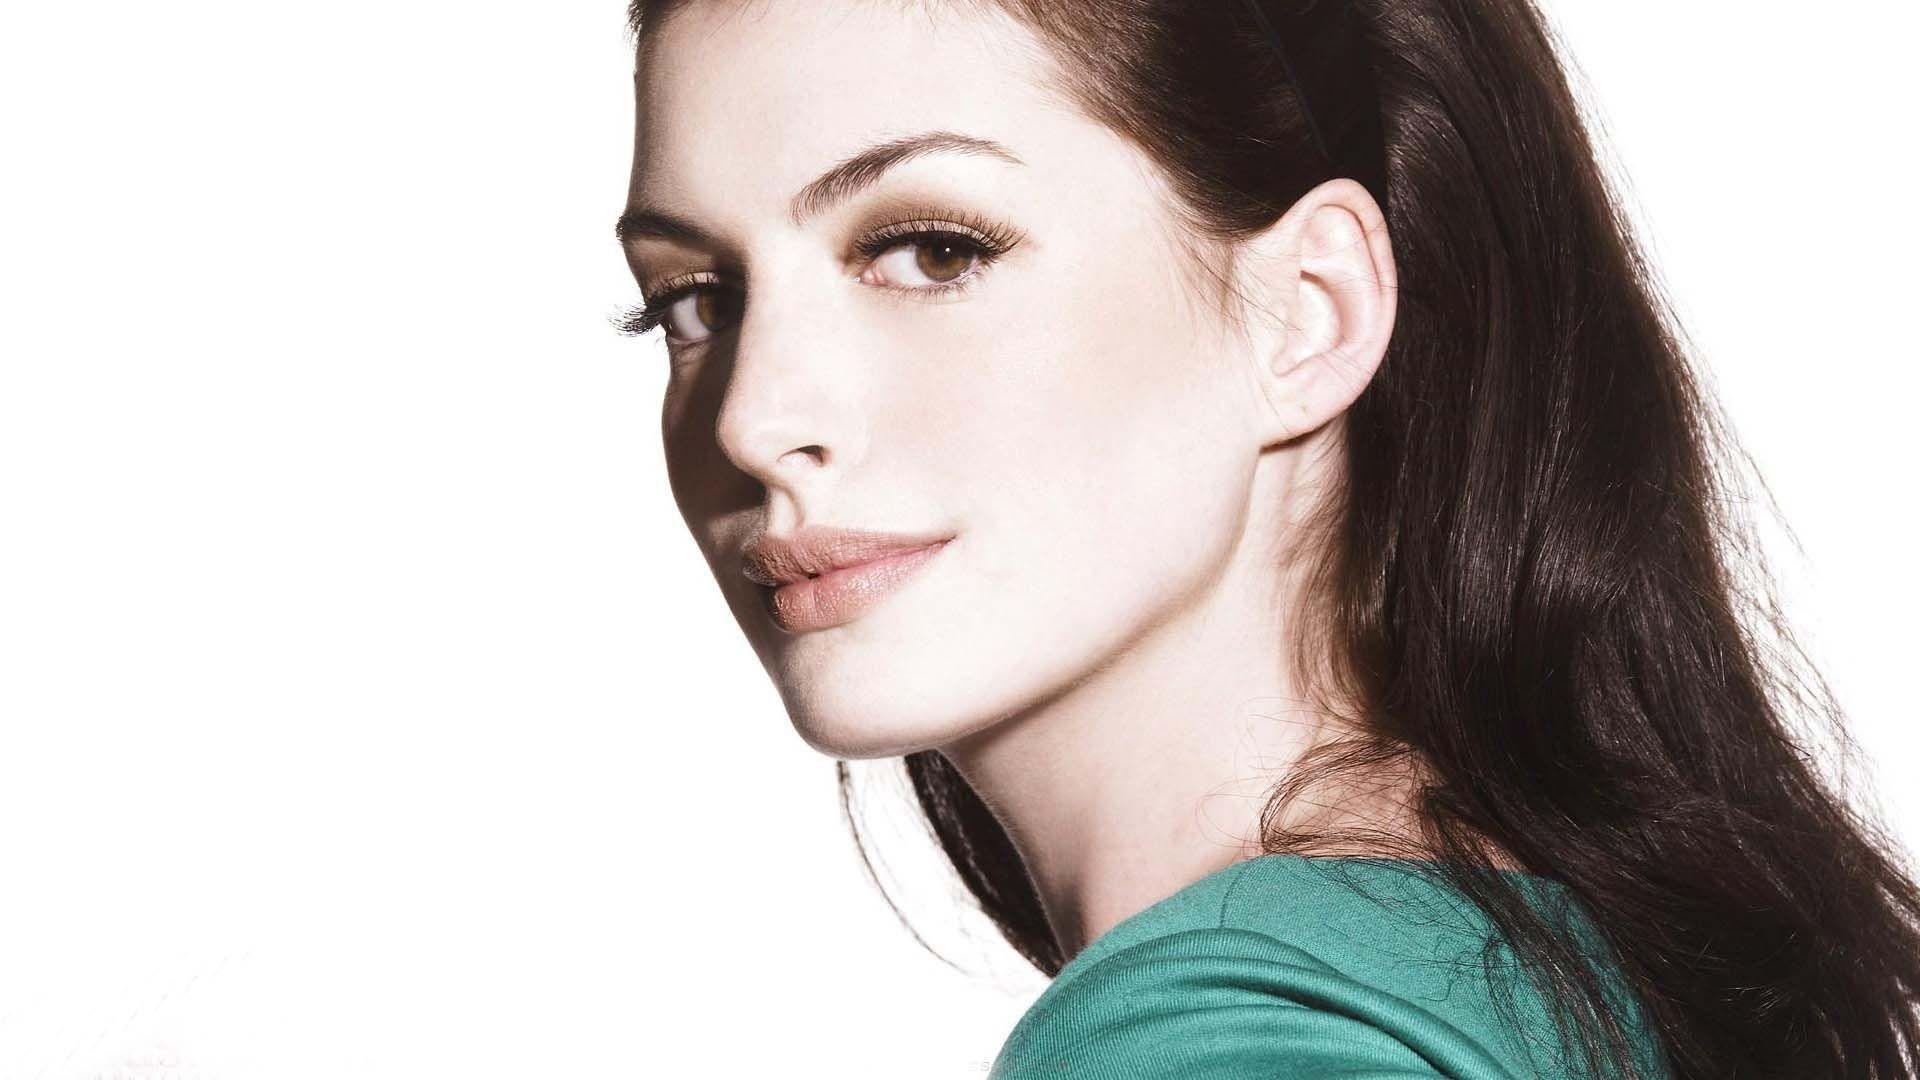 Anne Hathaway Celebrity Wallpaper 51894 1920x1080 px